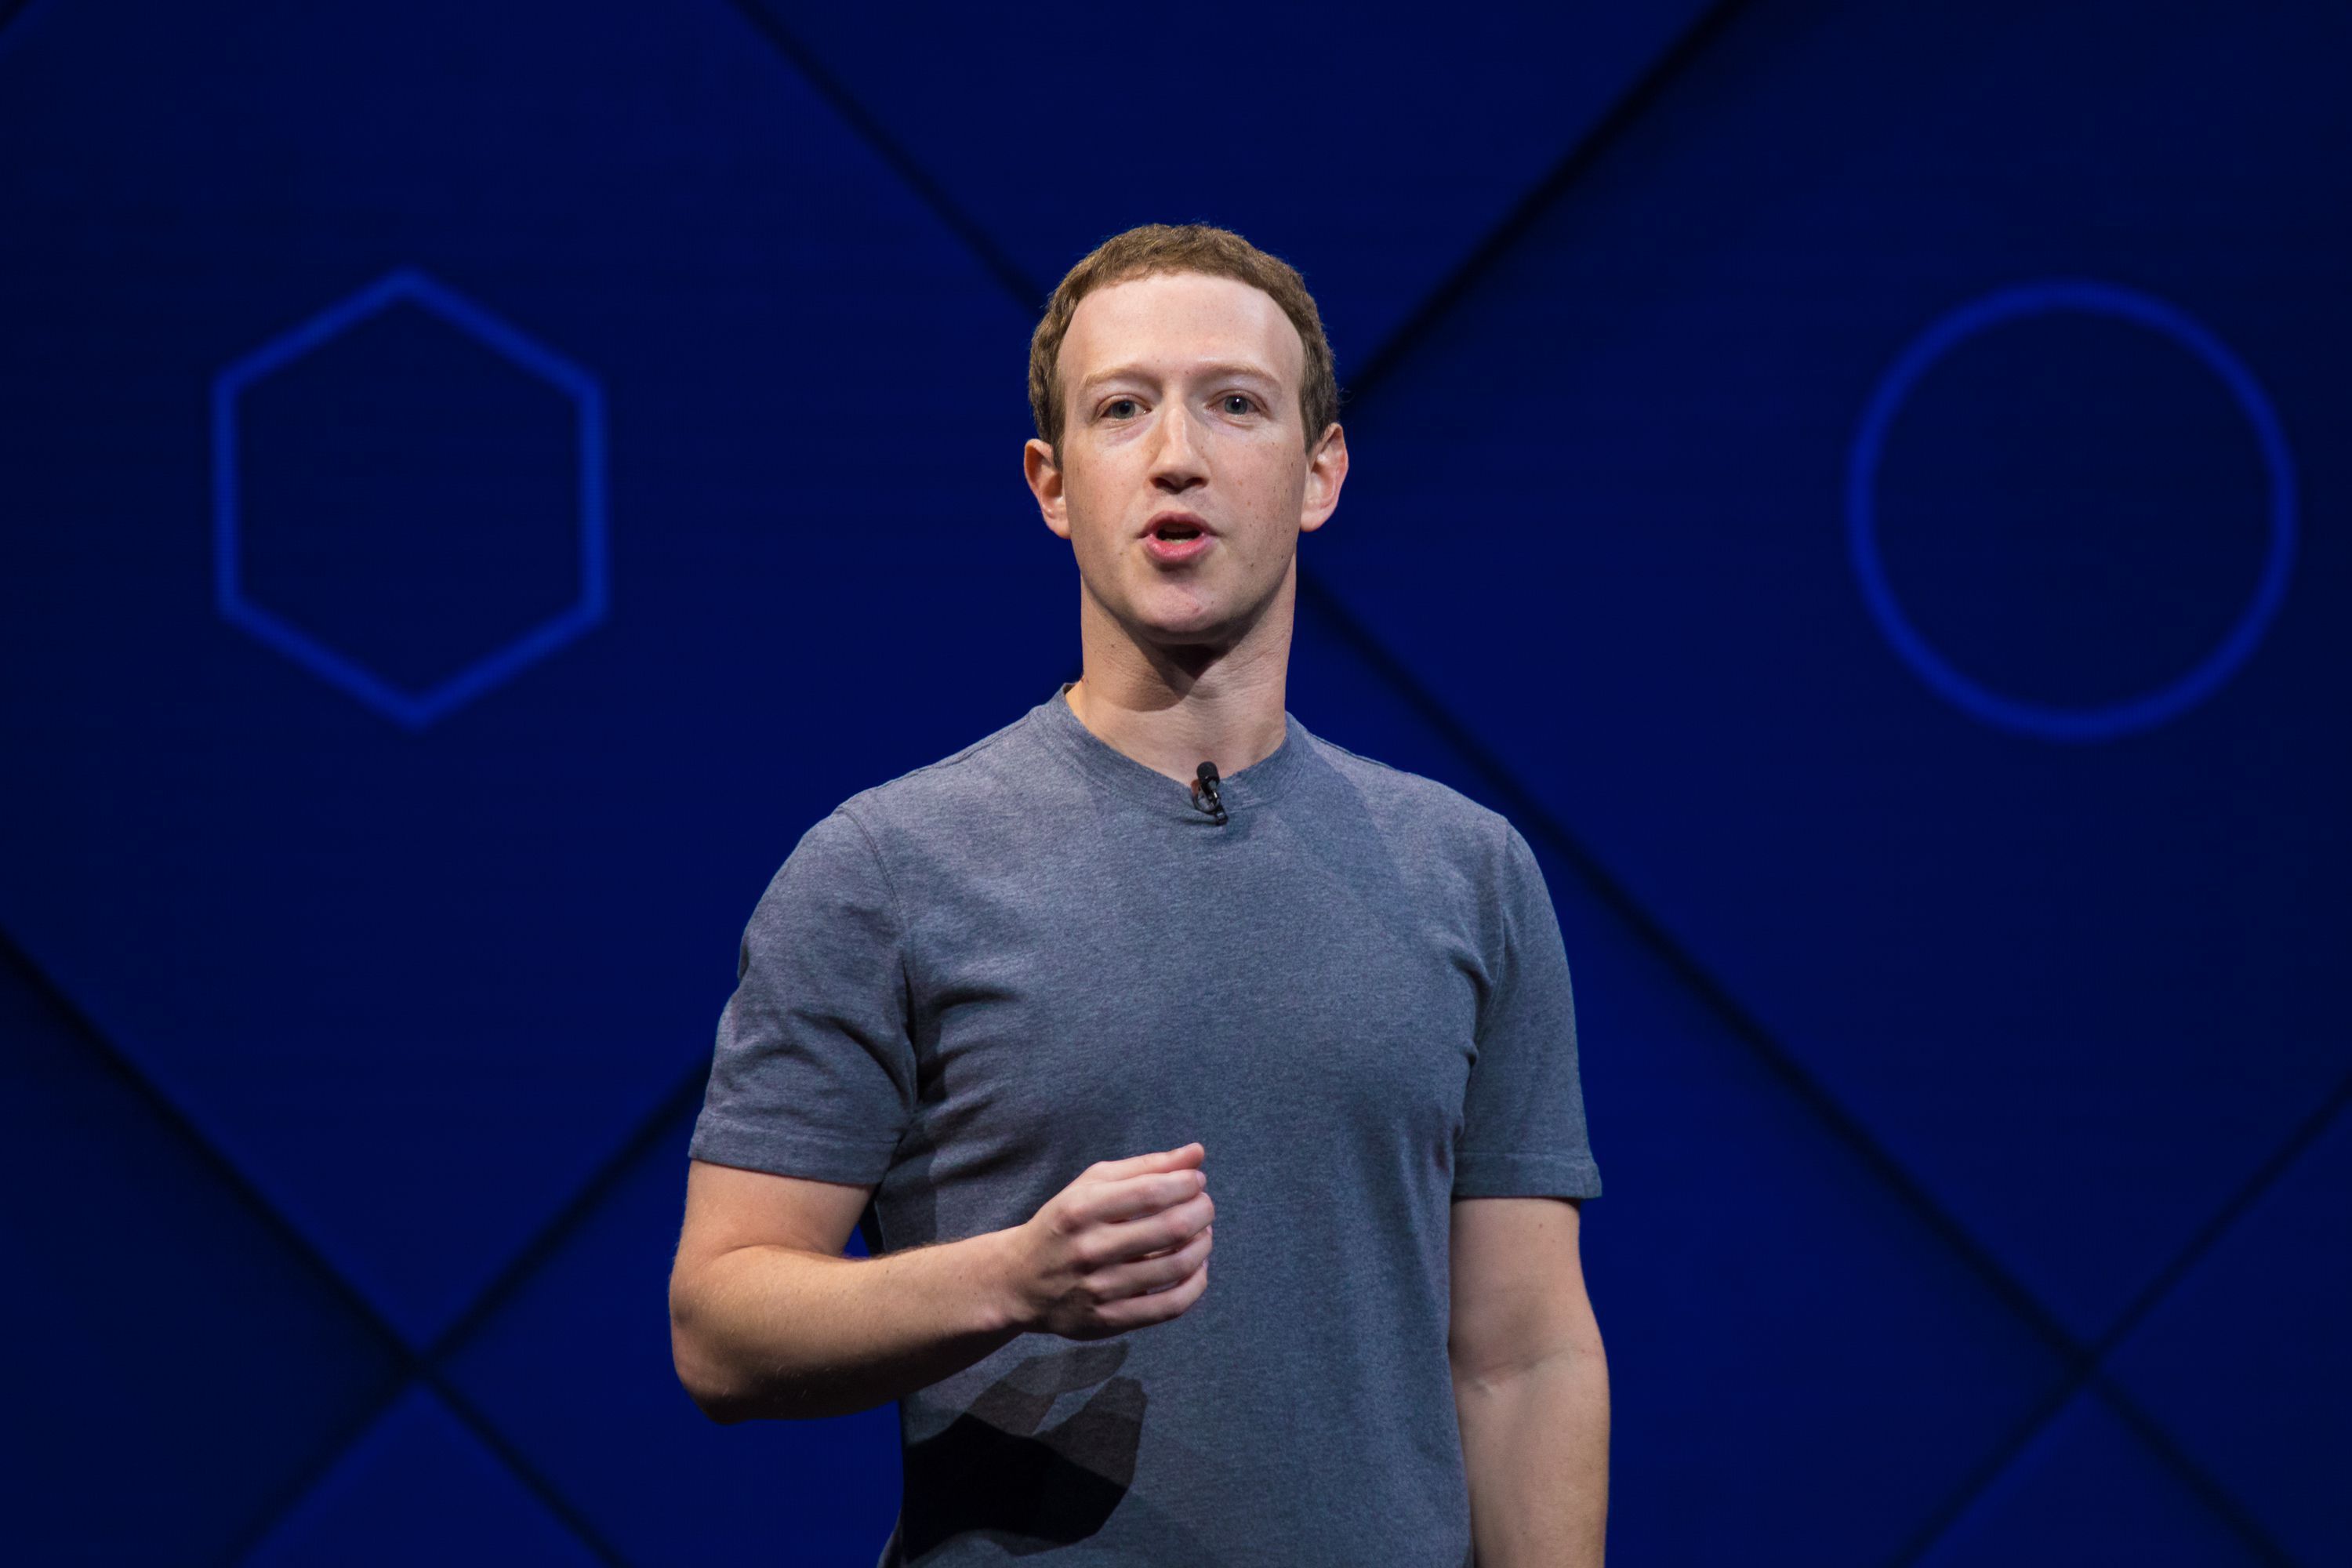 Facebookの最高経営責任者（CEO）Mark Zuckerberg氏